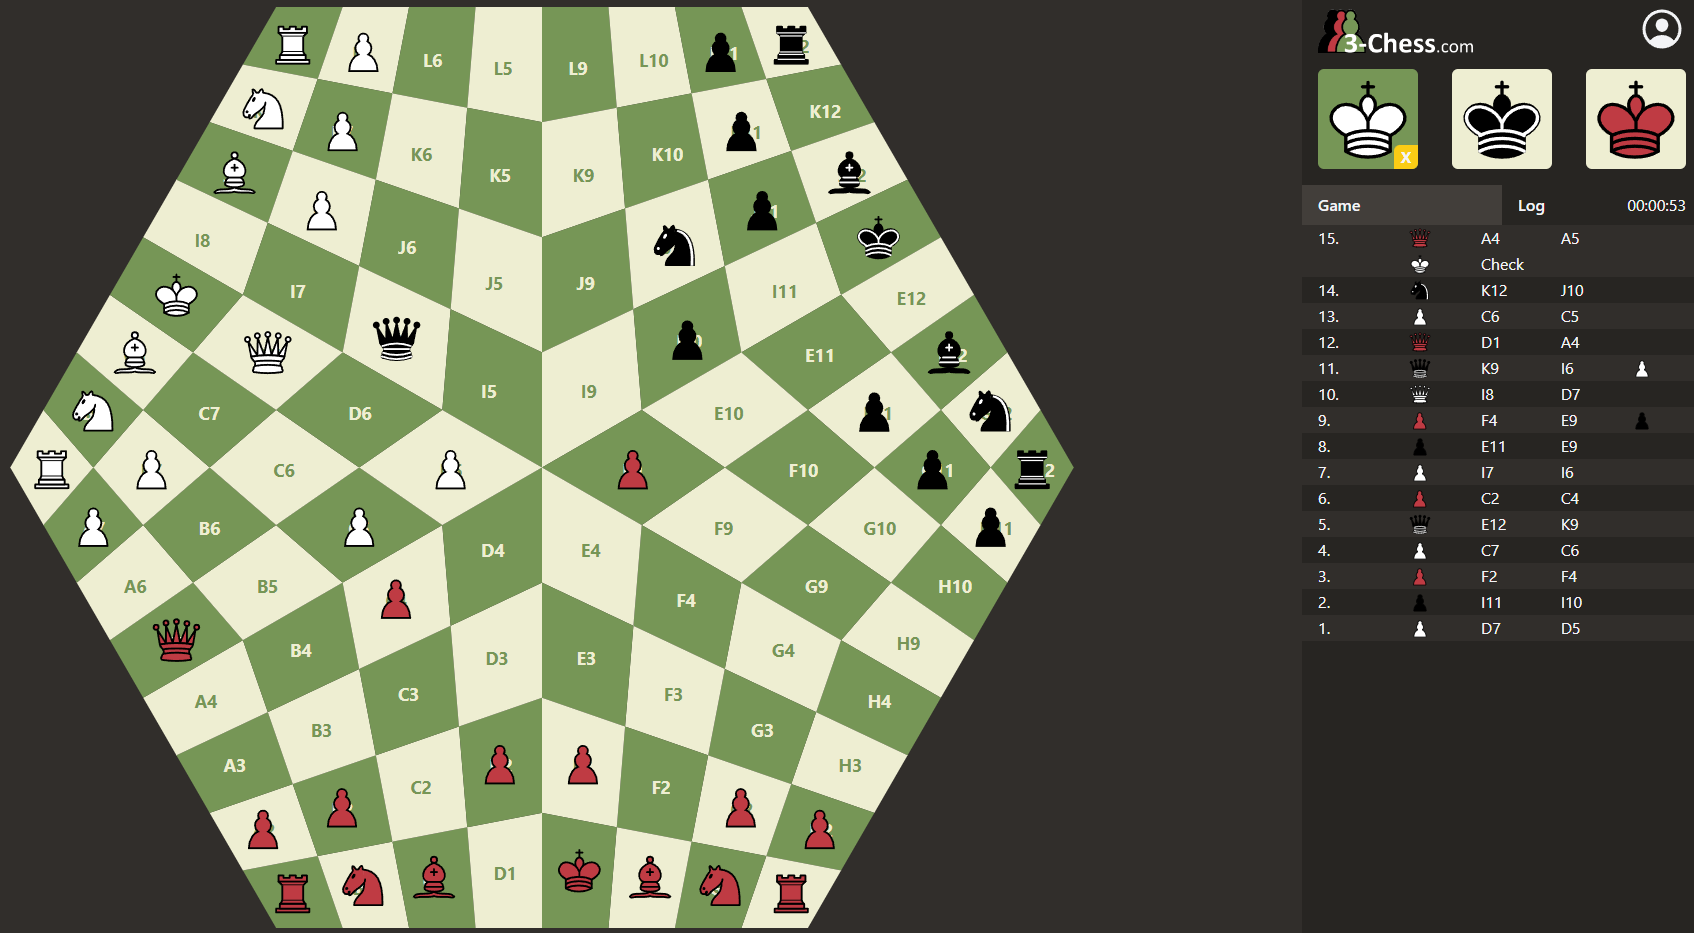 startuptile 3Chess - Three player chess online-Play three player chess online free for web and mobile